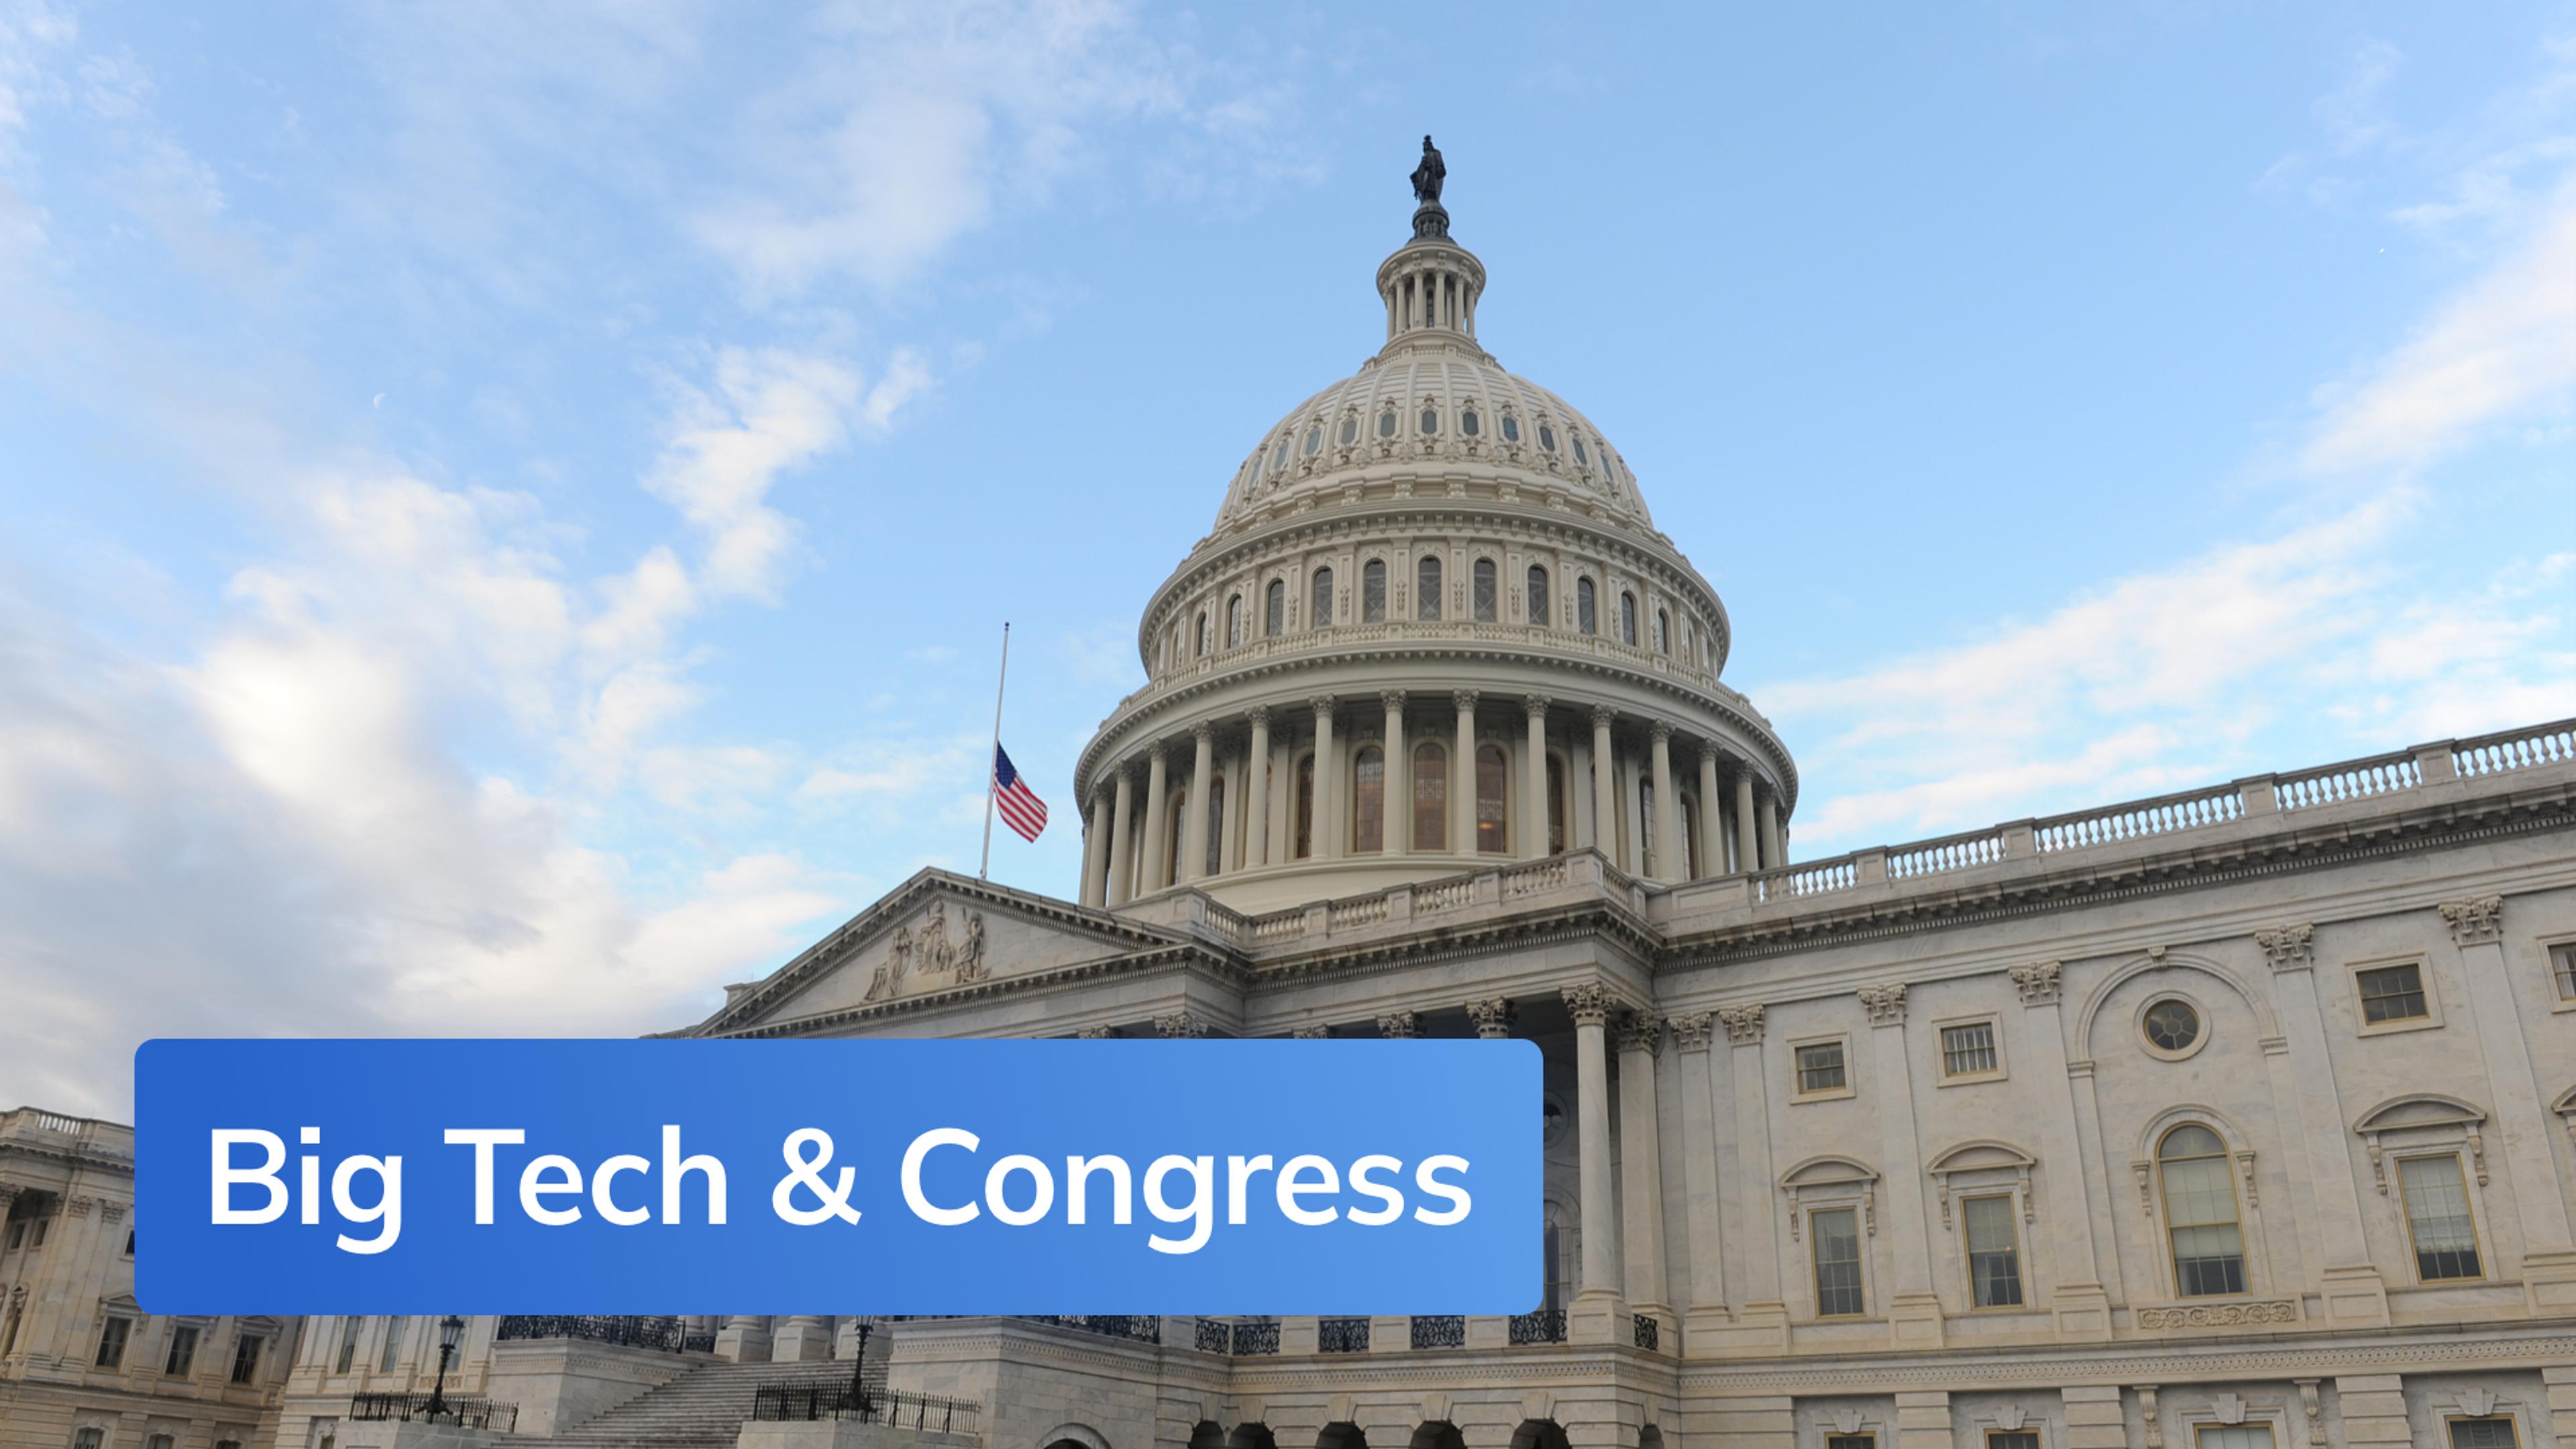 Big Tech & Congress